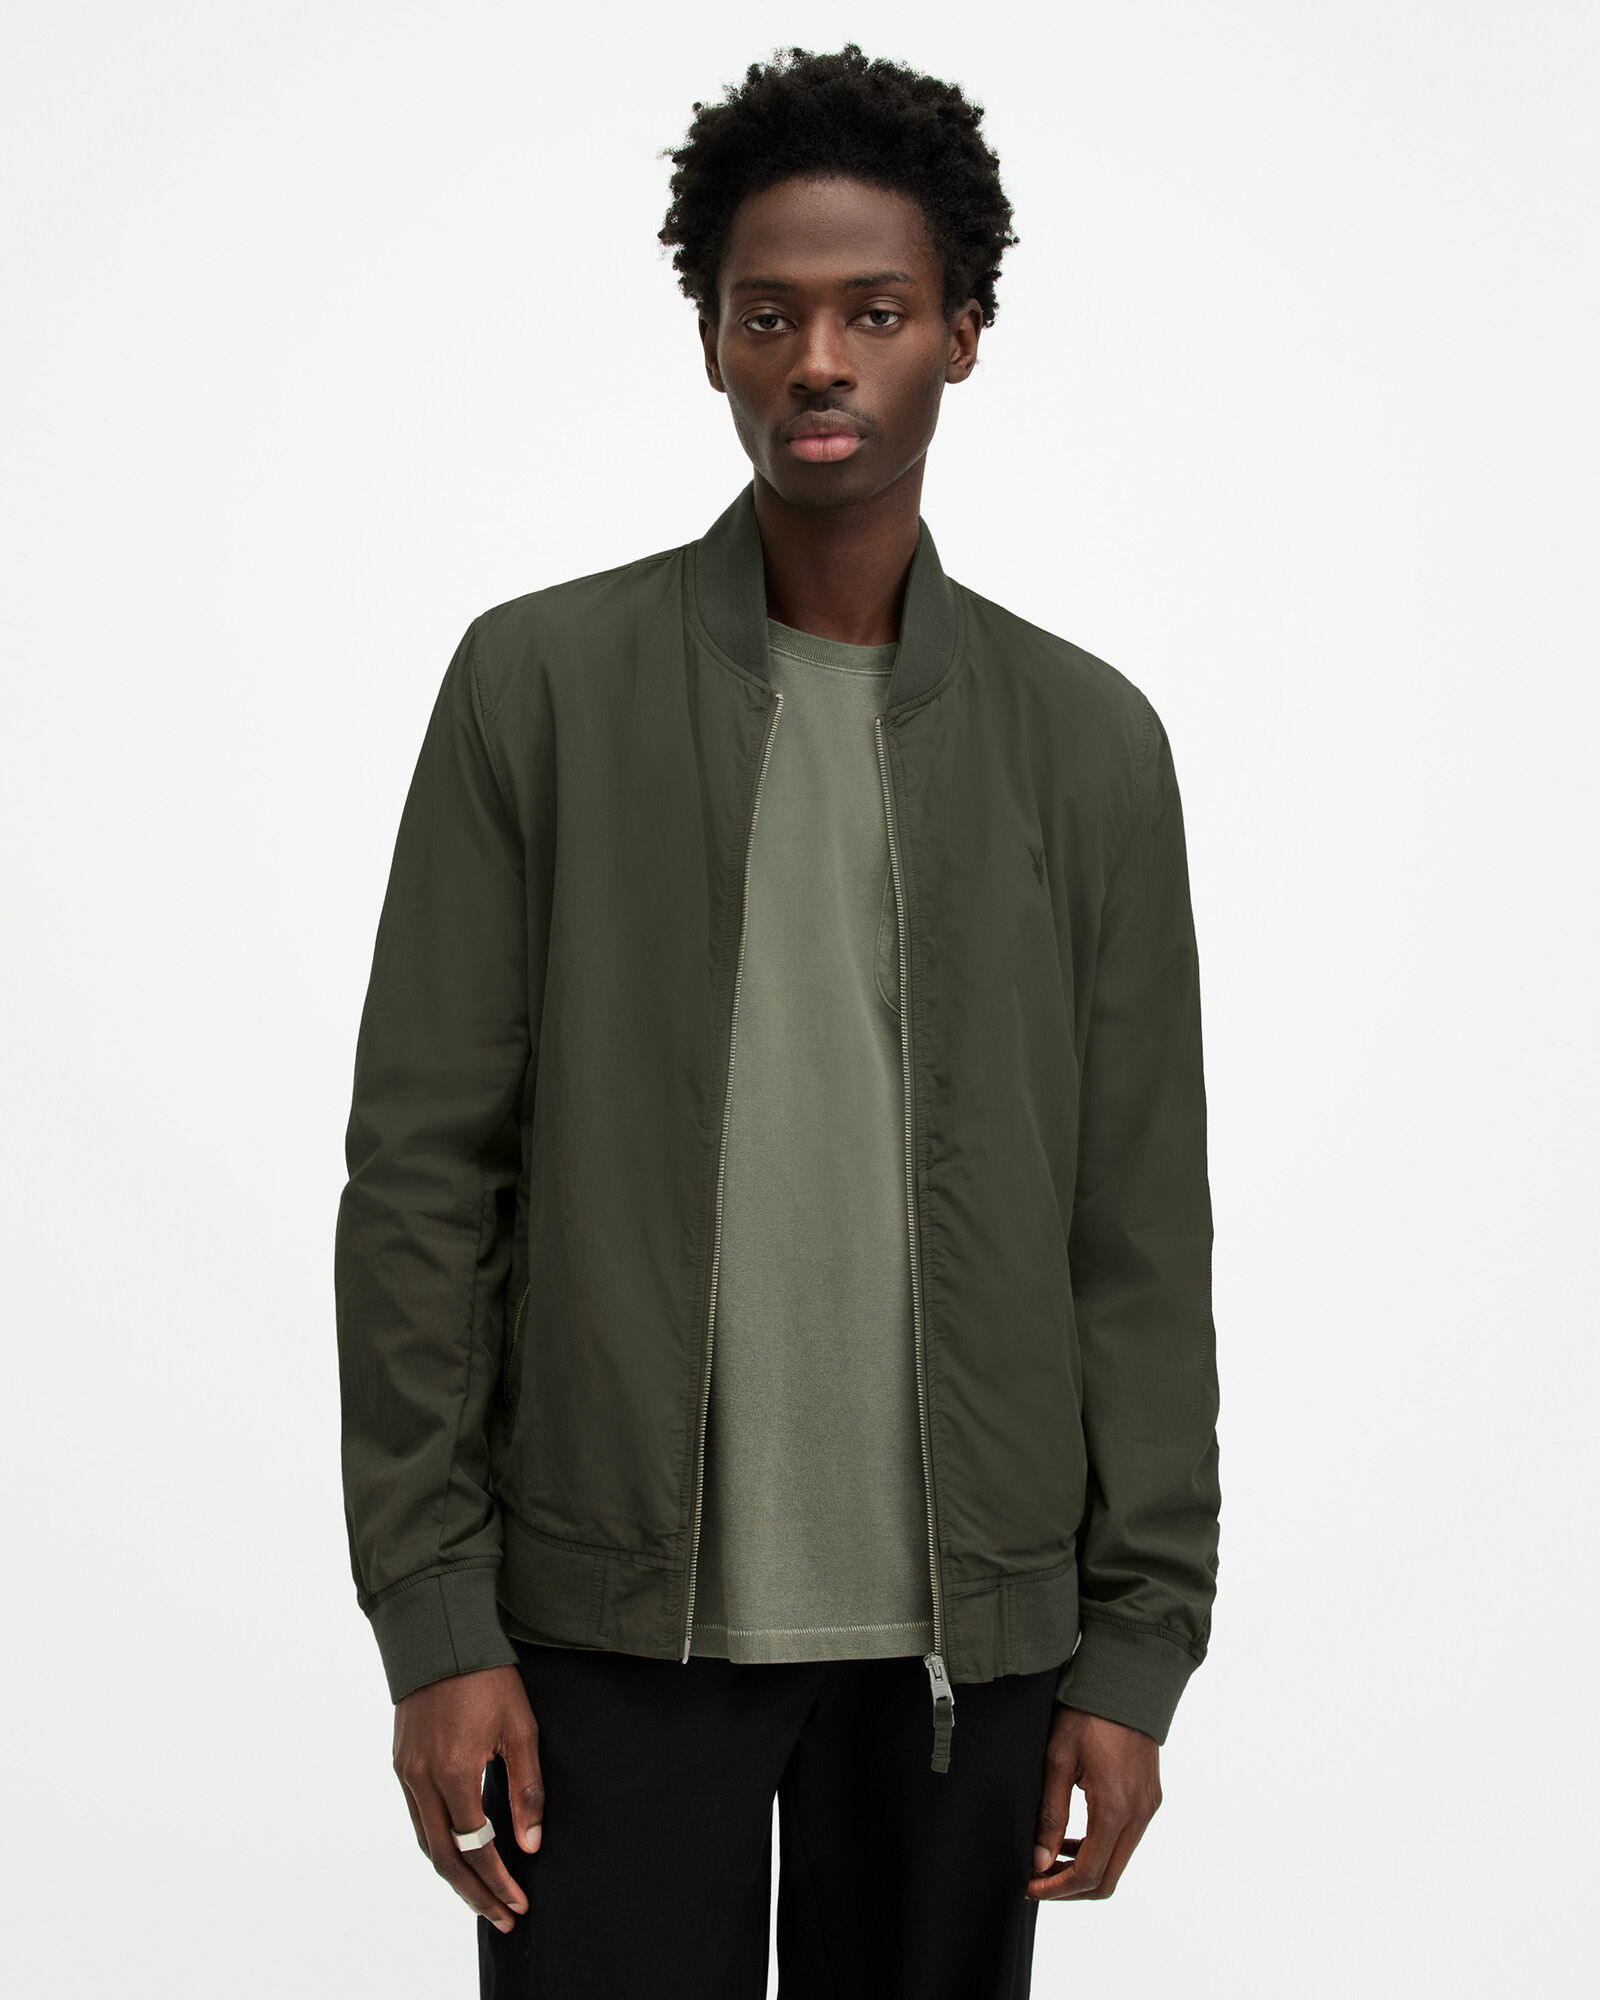 Paisely Design Printed Green Bomber Jacket for Men – Go Devil